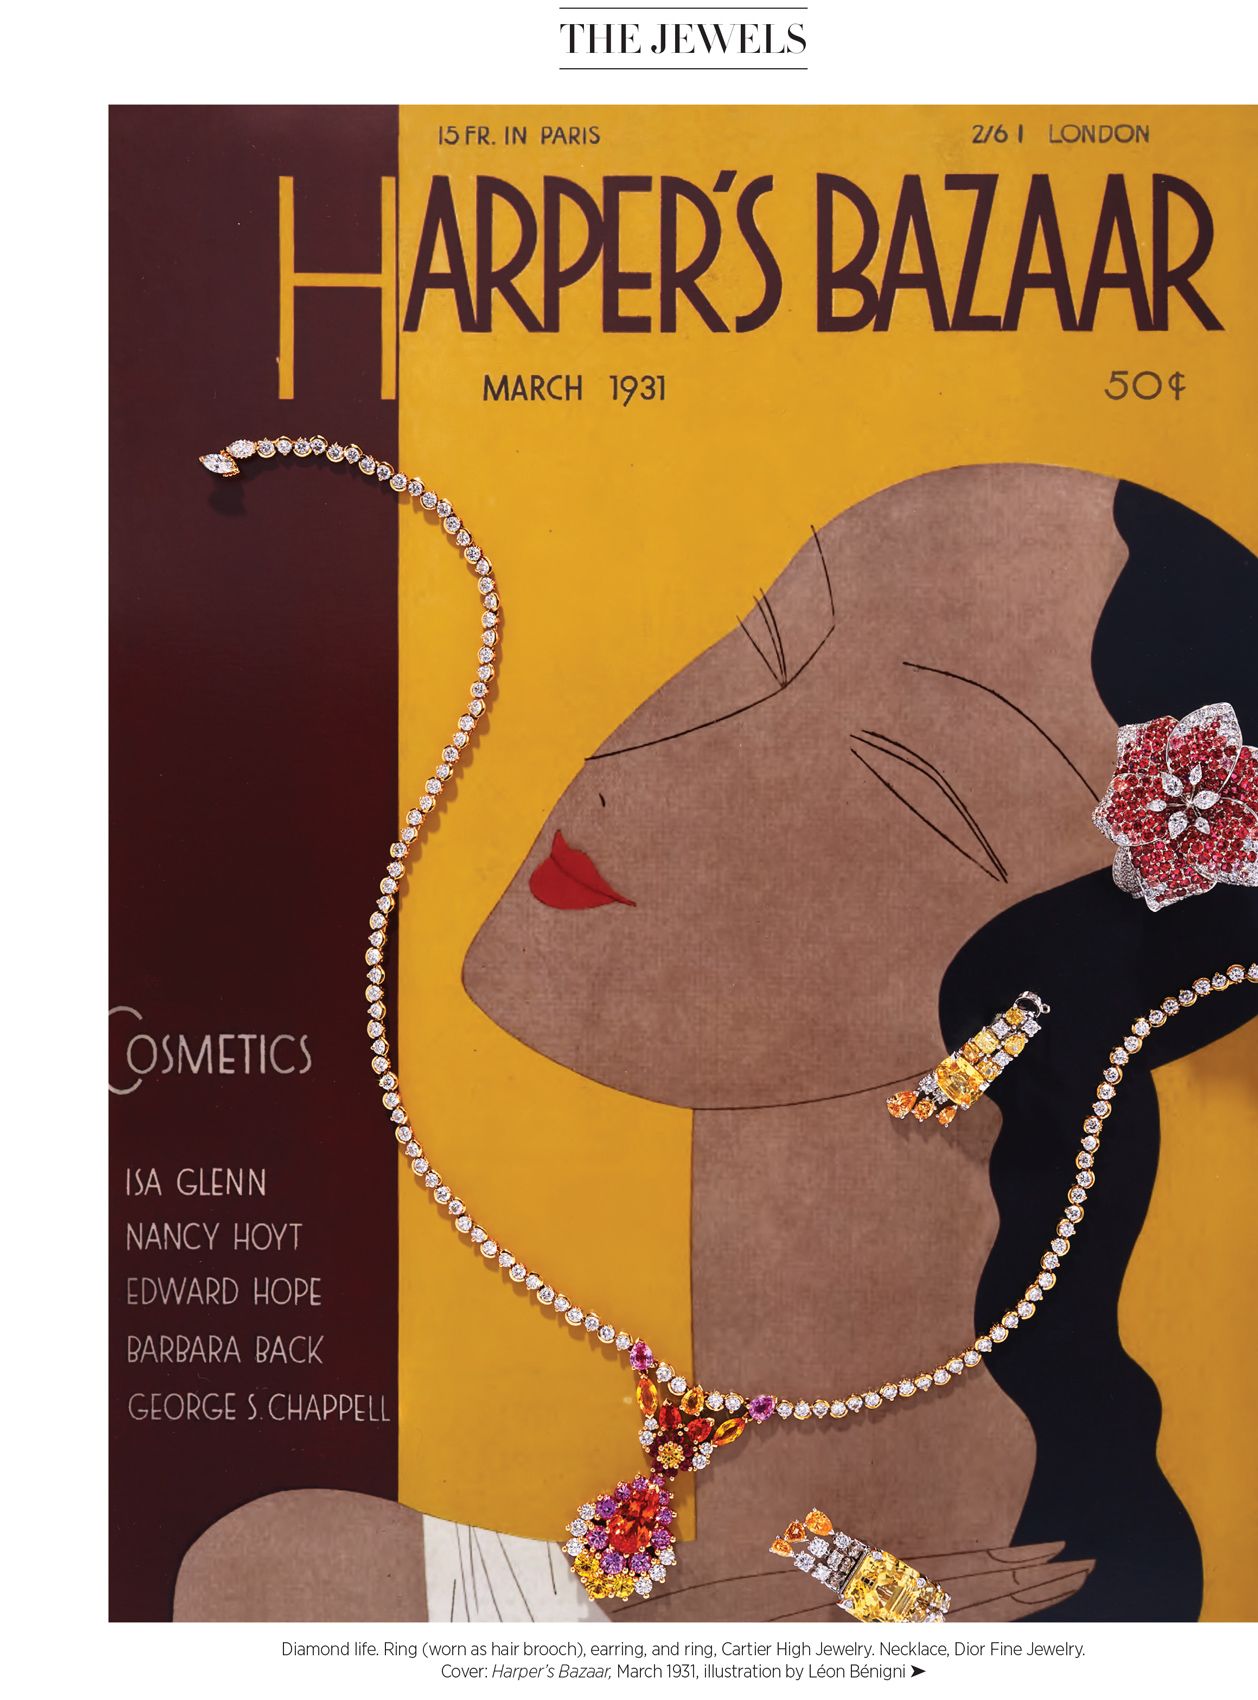 Vintage Glamour Harpers Bazaar